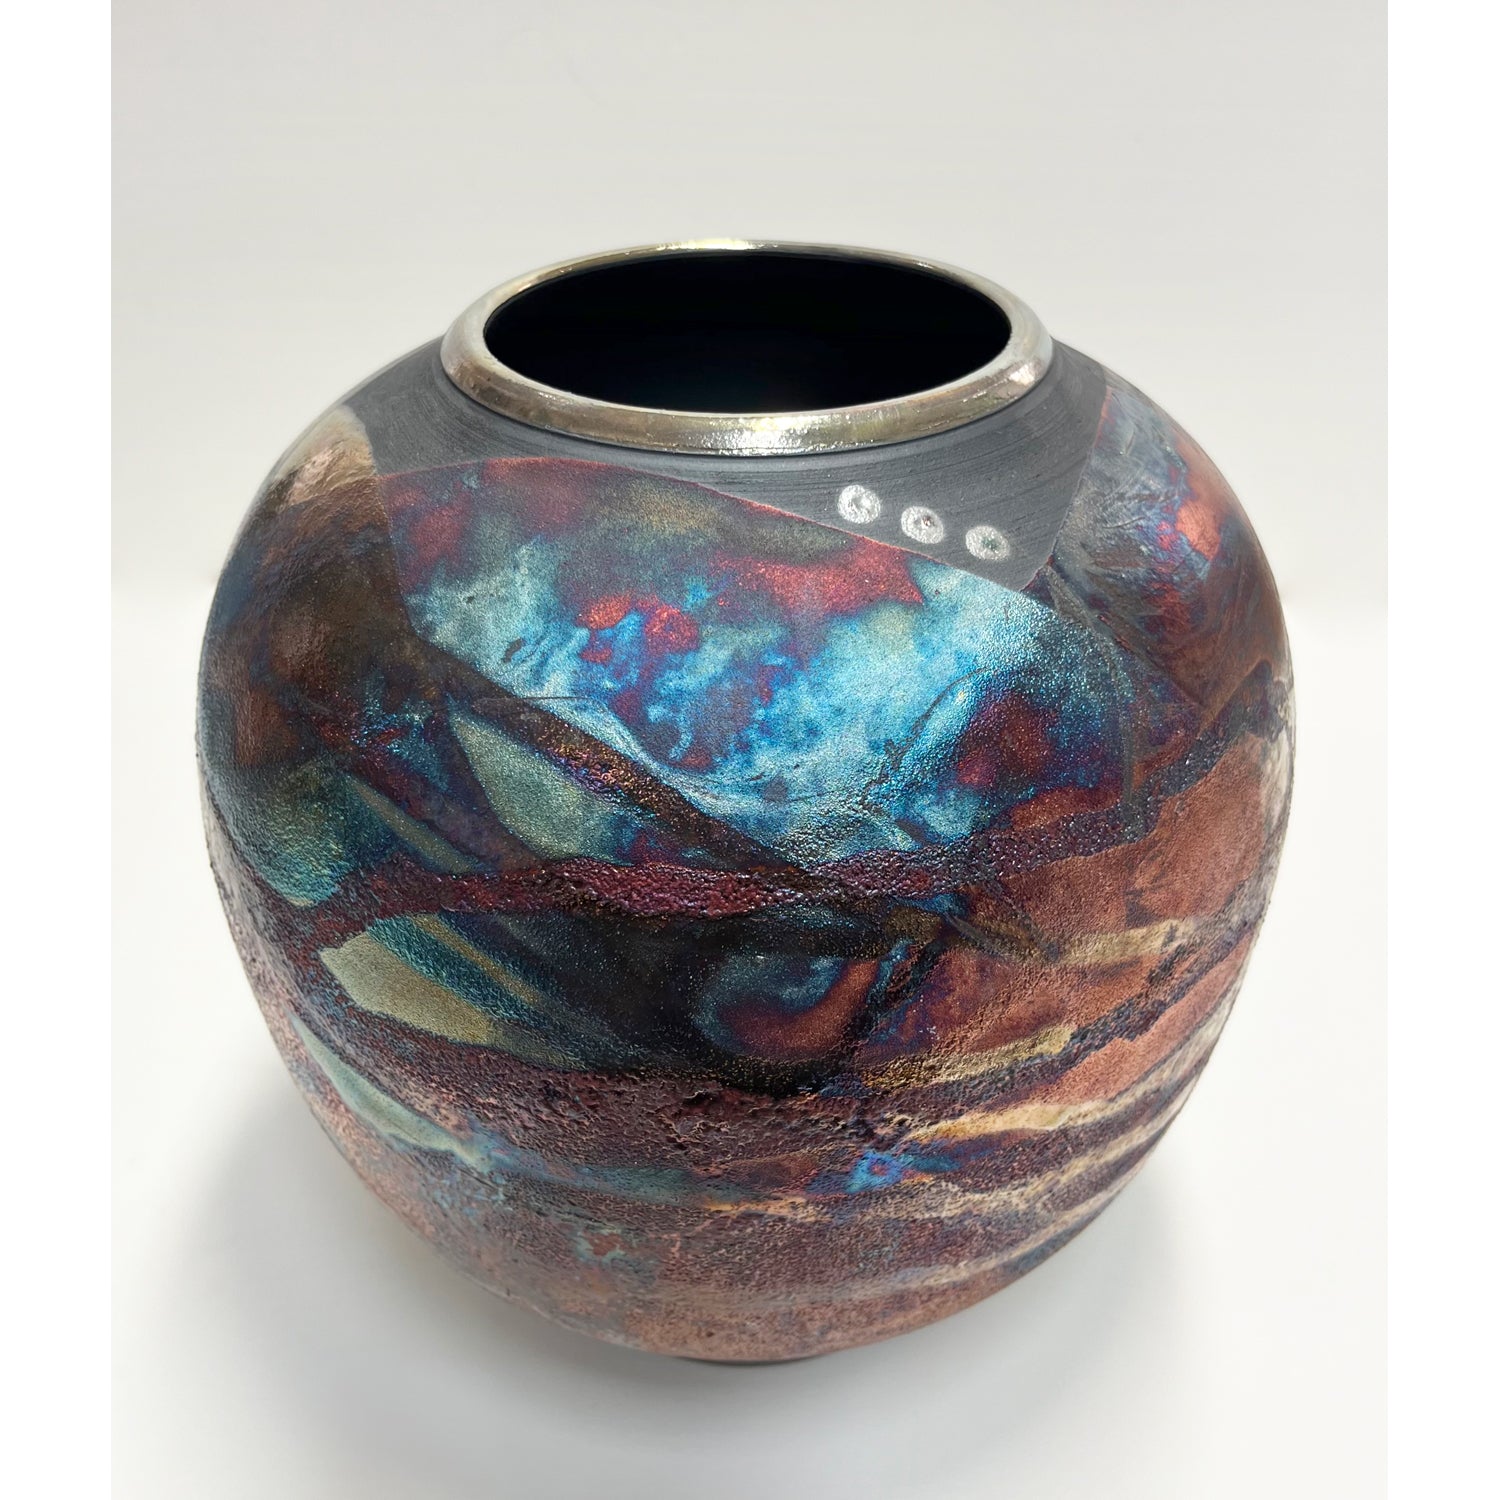 Shu-Chen Cheng - Large Raku Luster Vase, 9.5" x 7.5" x 7.5"